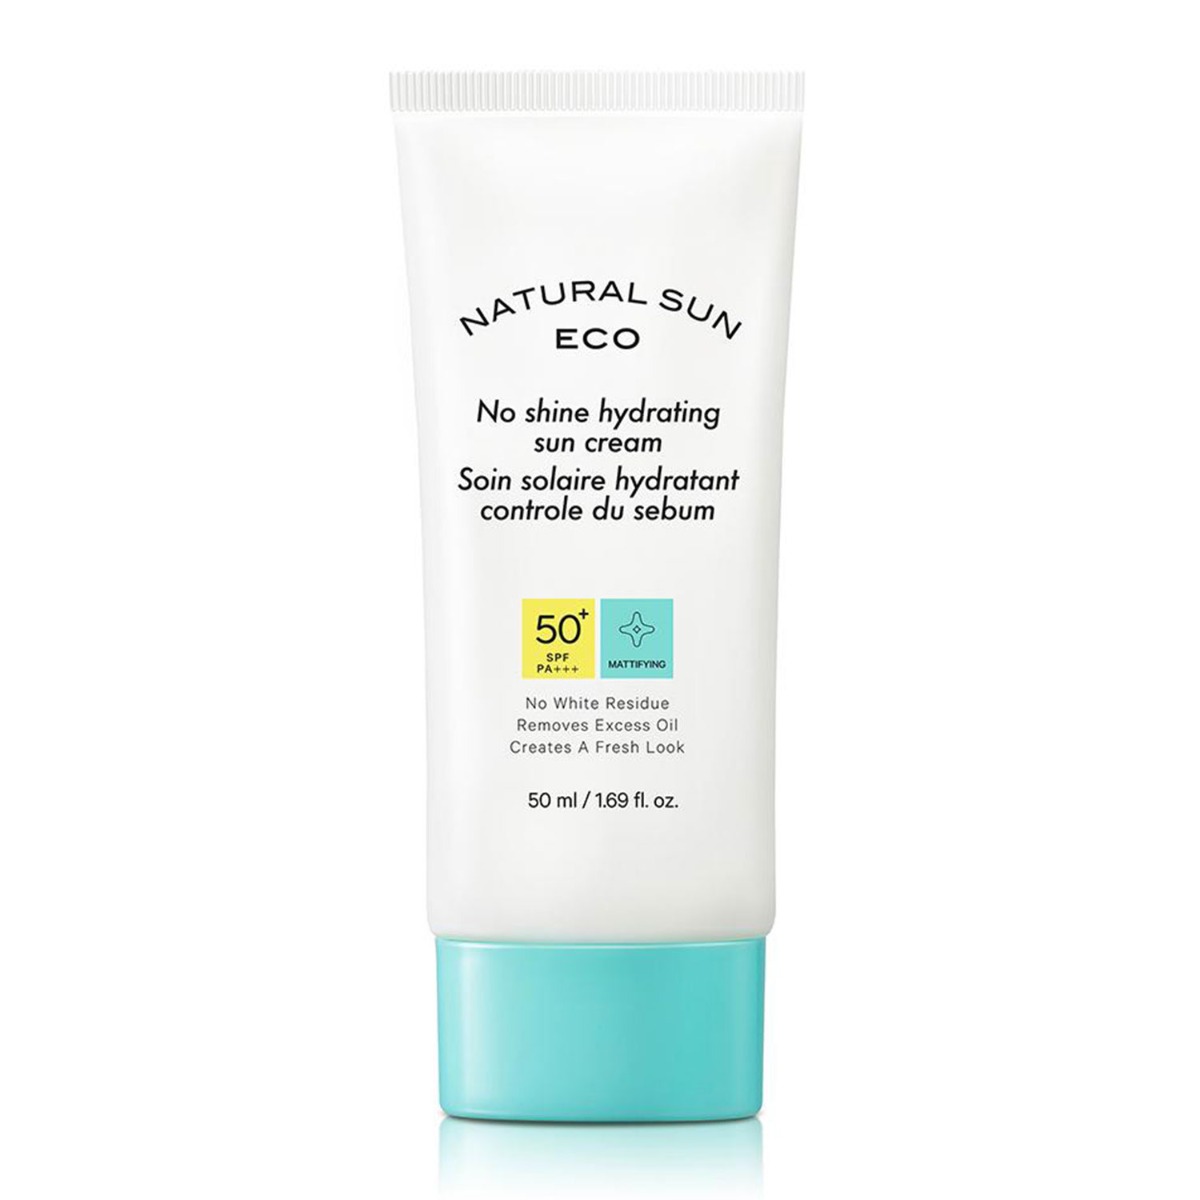 The Face Shop NaturalSun Eco No Shine Hydrating Sun Cream, 50ml